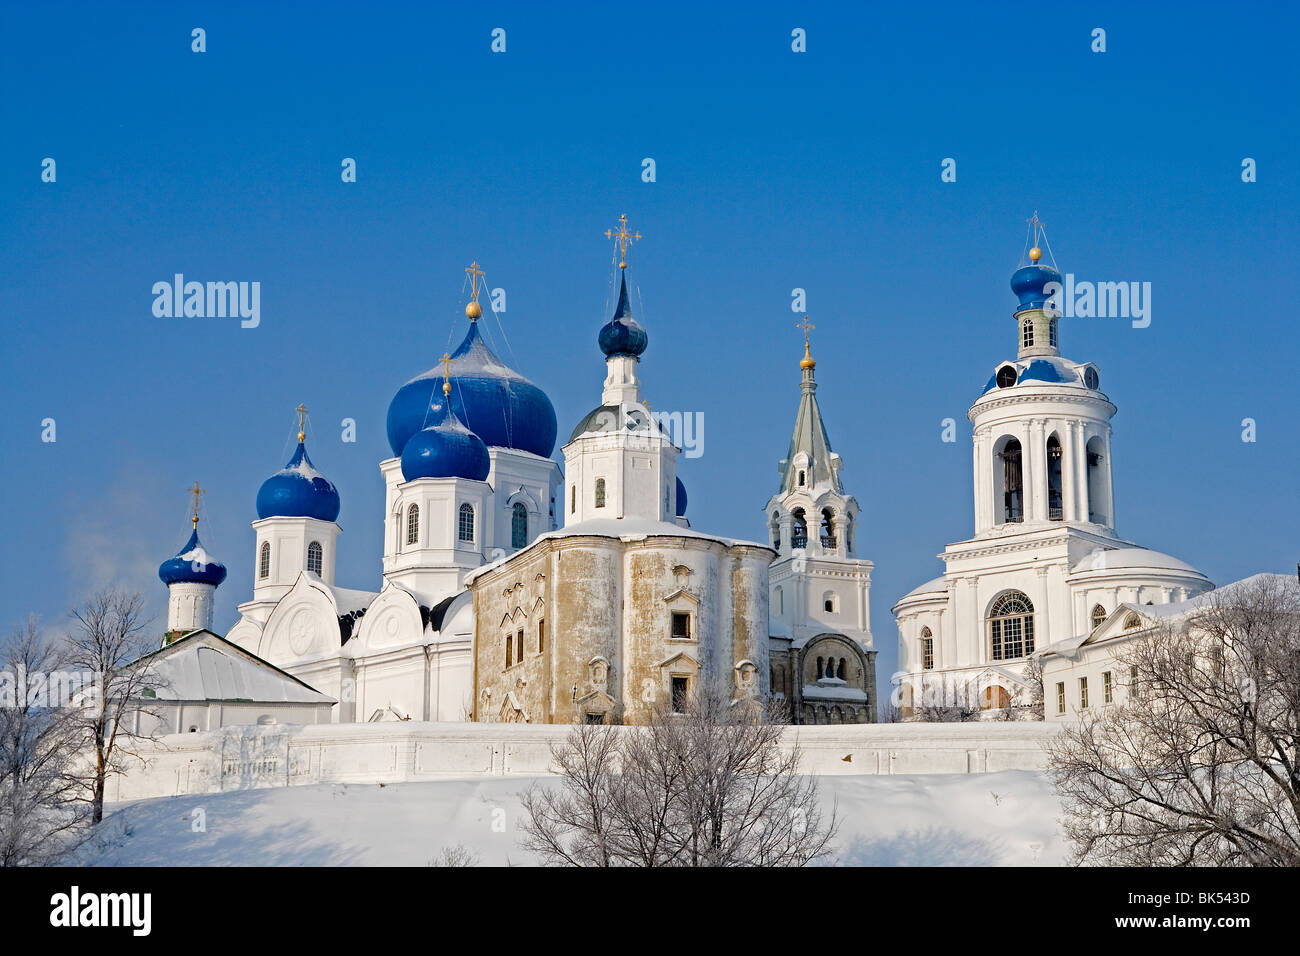 Russia,Golden Ring,Bogoliubovo,Monastery buildings,Orthodox church,Winter,snow Stock Photo